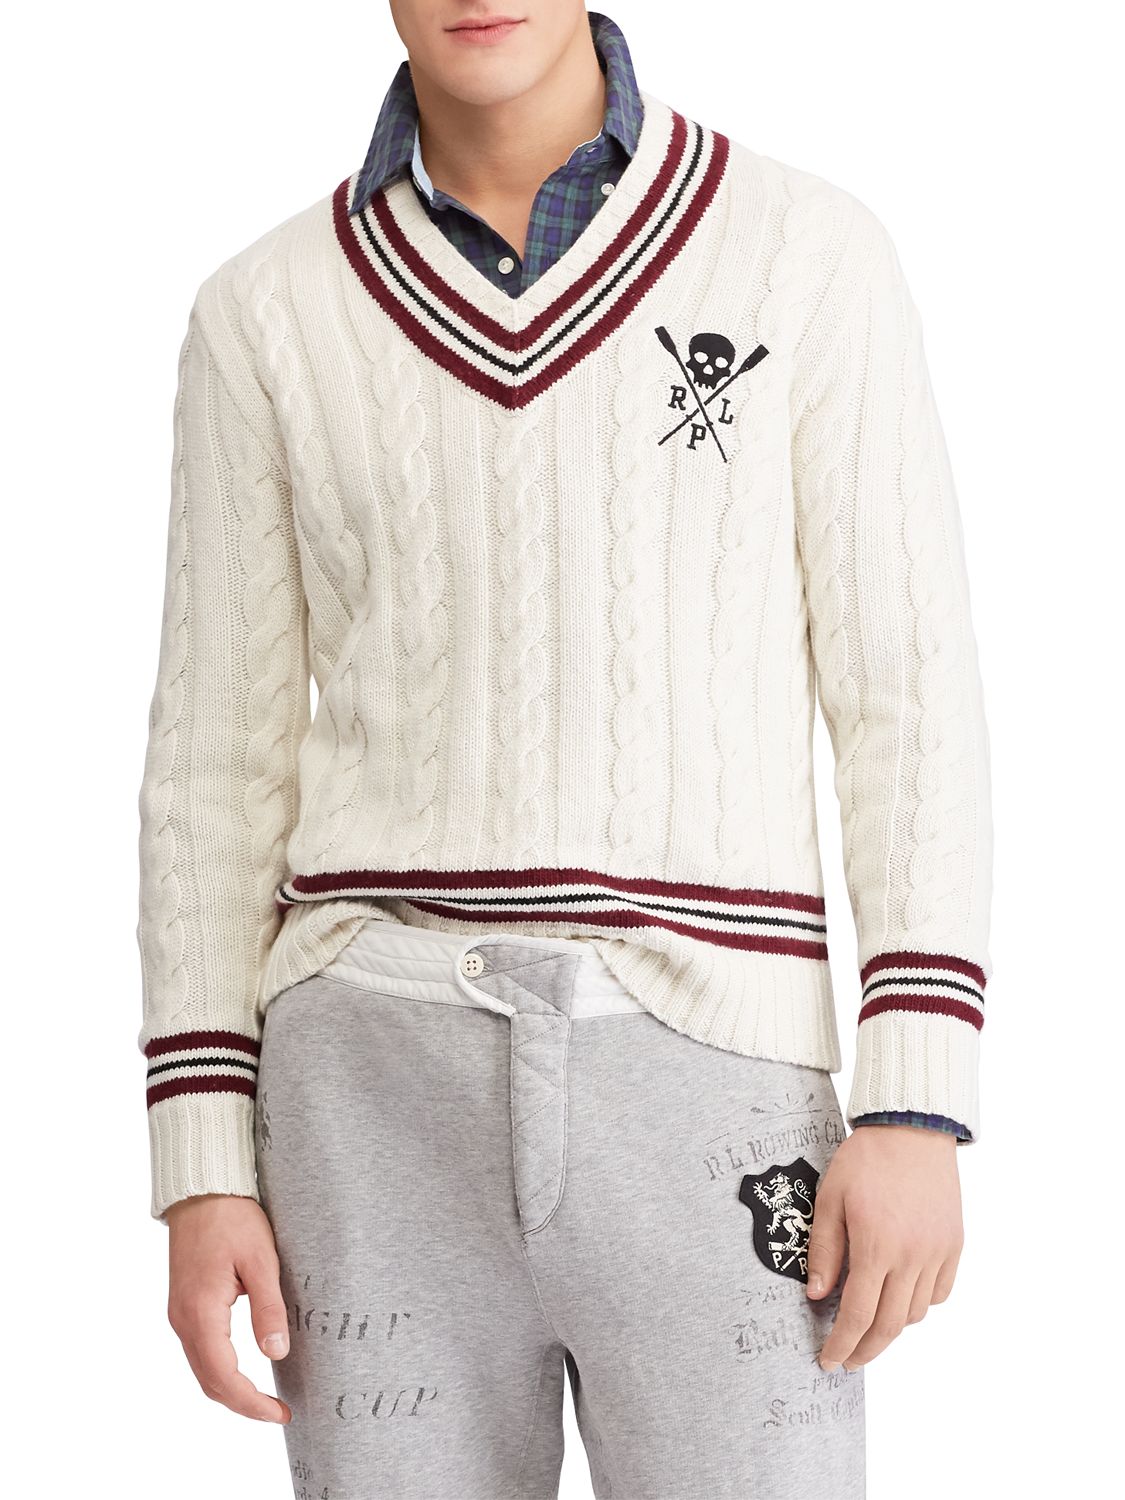 Polo Ralph Lauren Cricket Cable Knit Jumper, Cream/Black